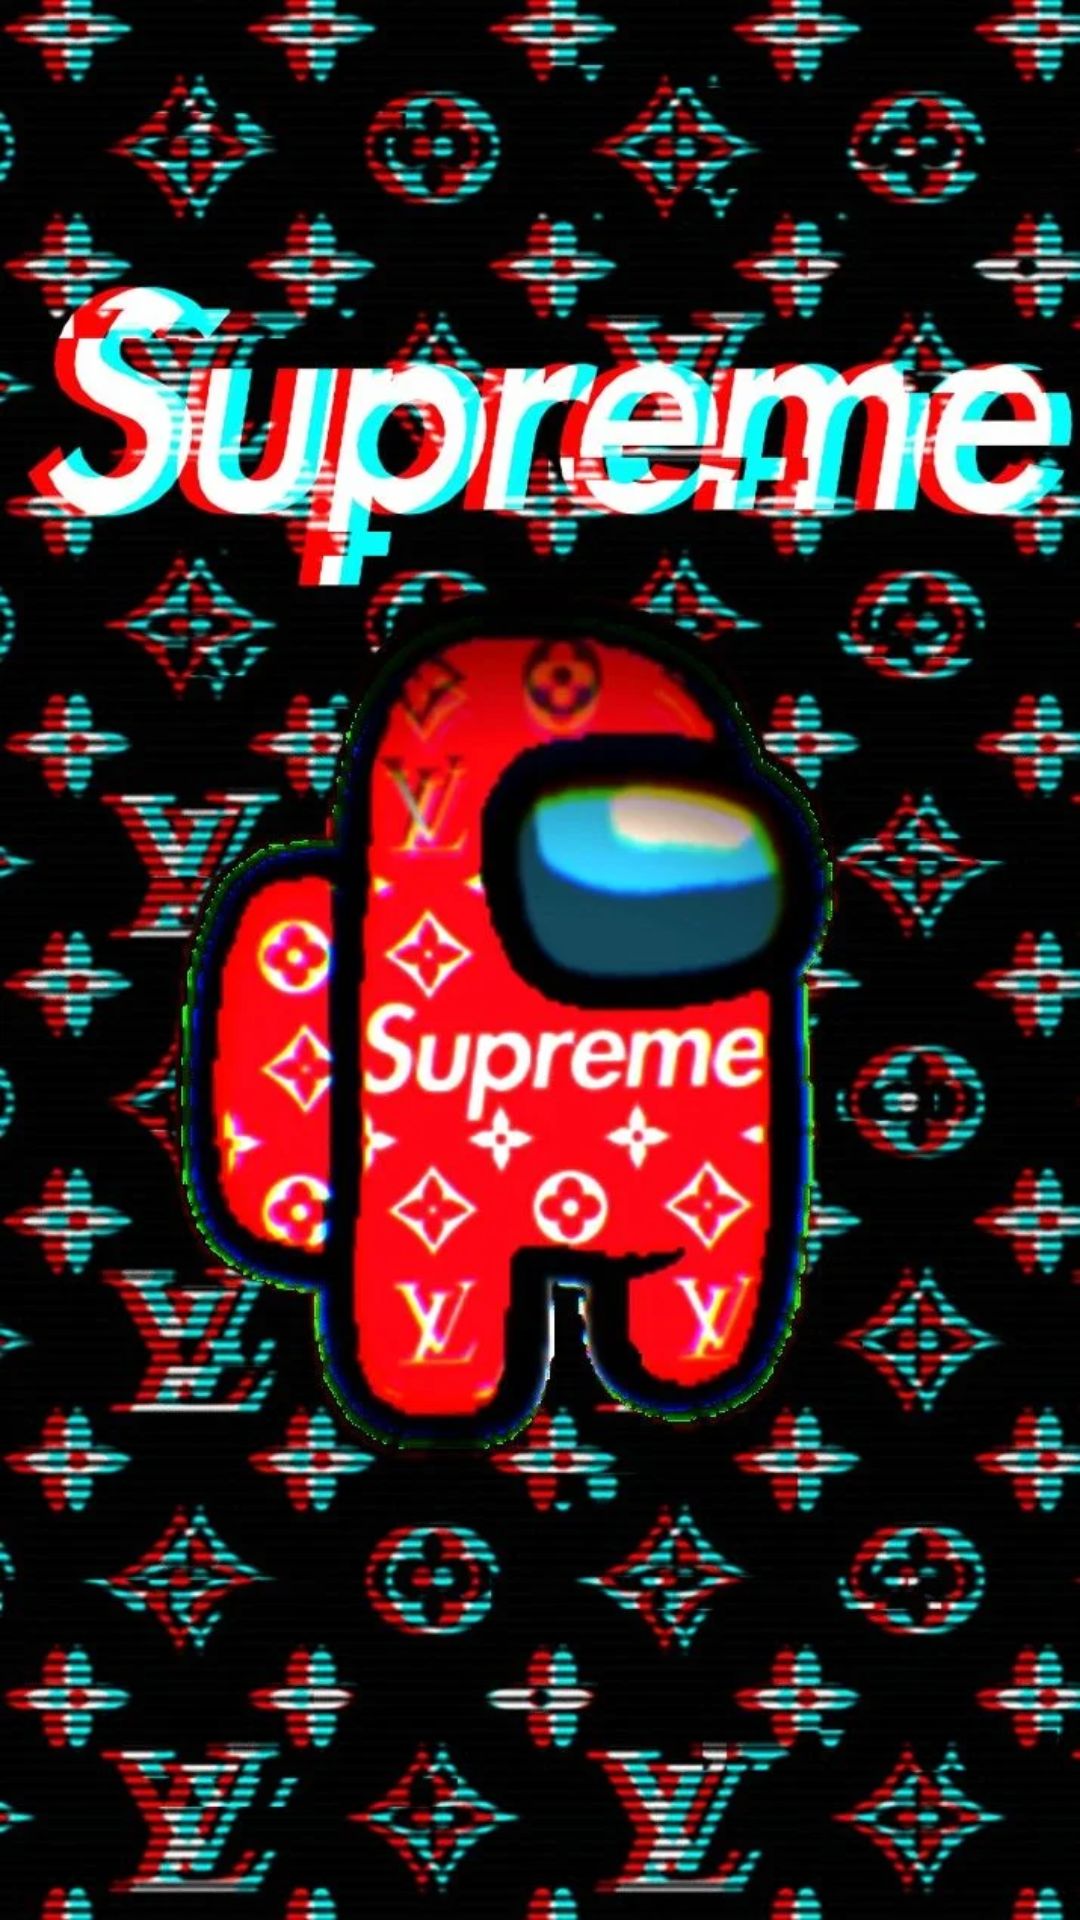 k Supreme Wallpaper For Mobile